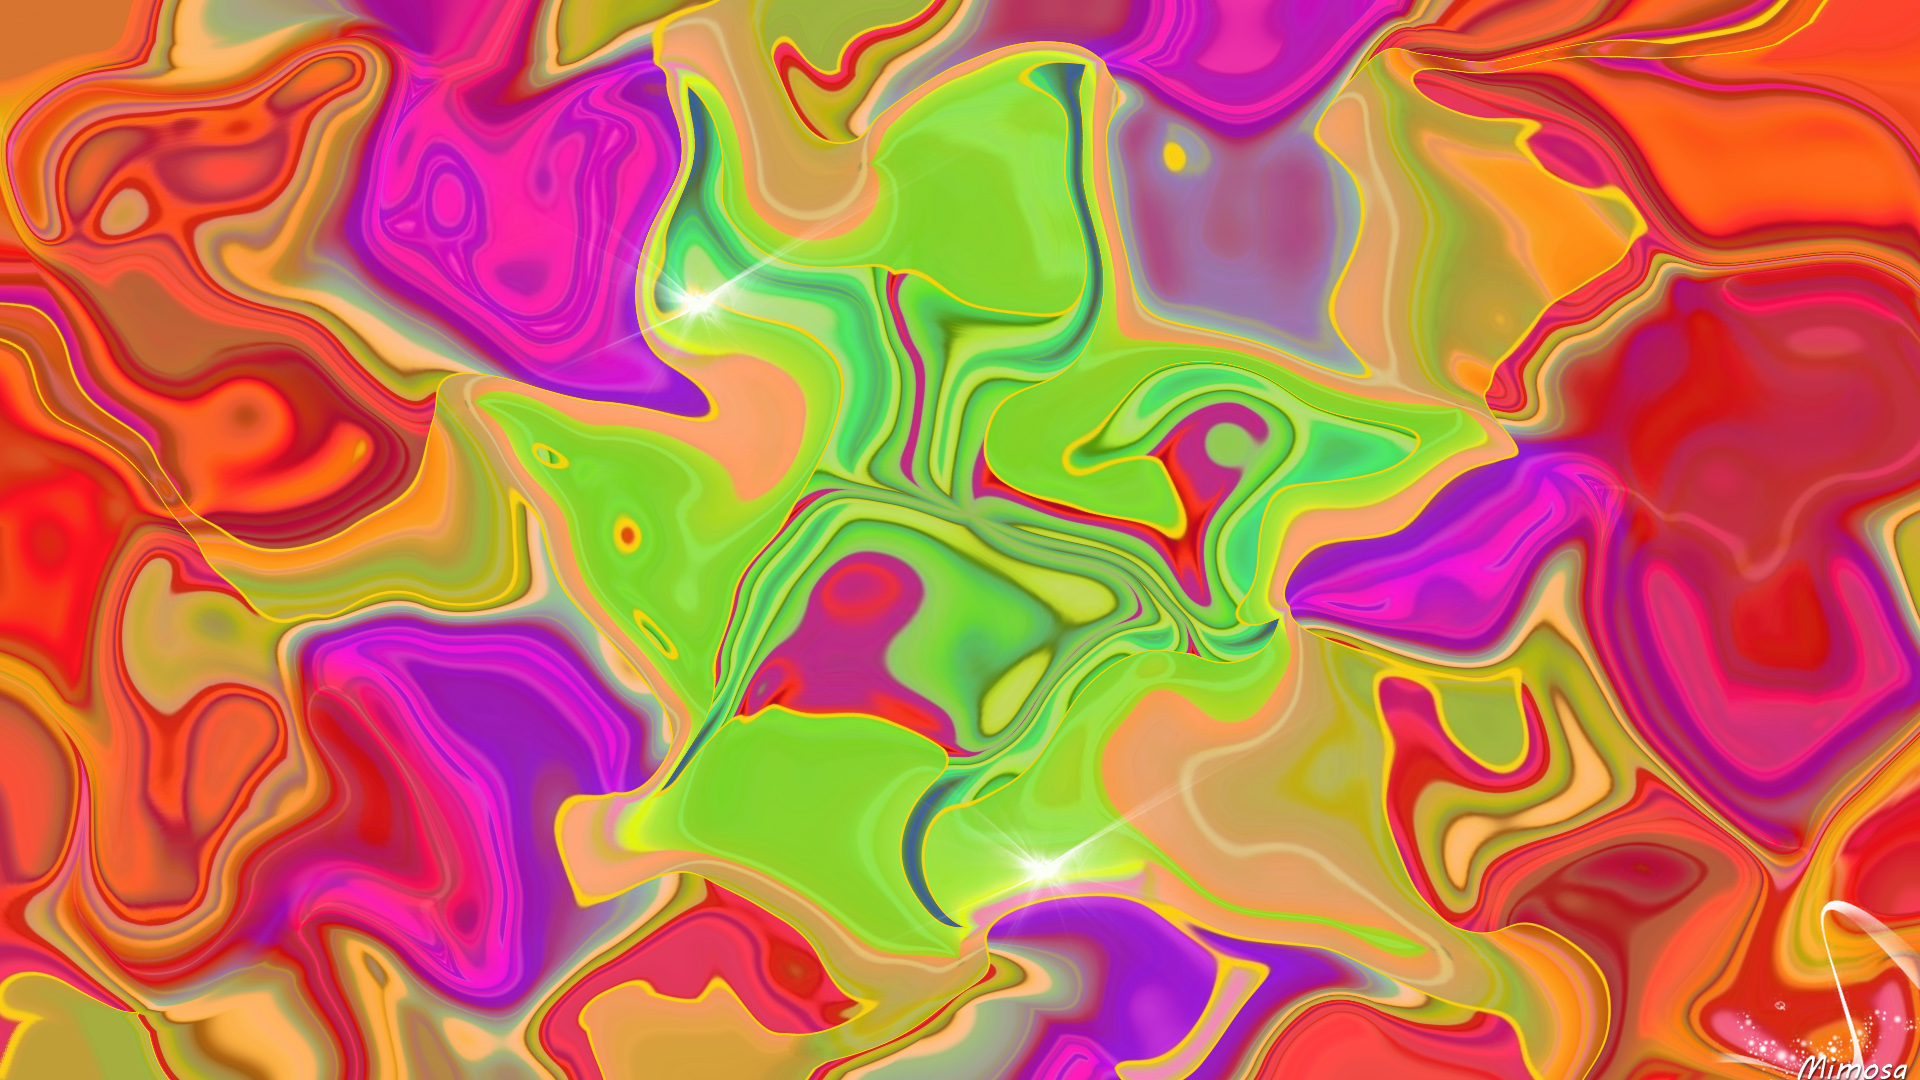 Artistic Colorful Digital Art Distortion 1920x1080